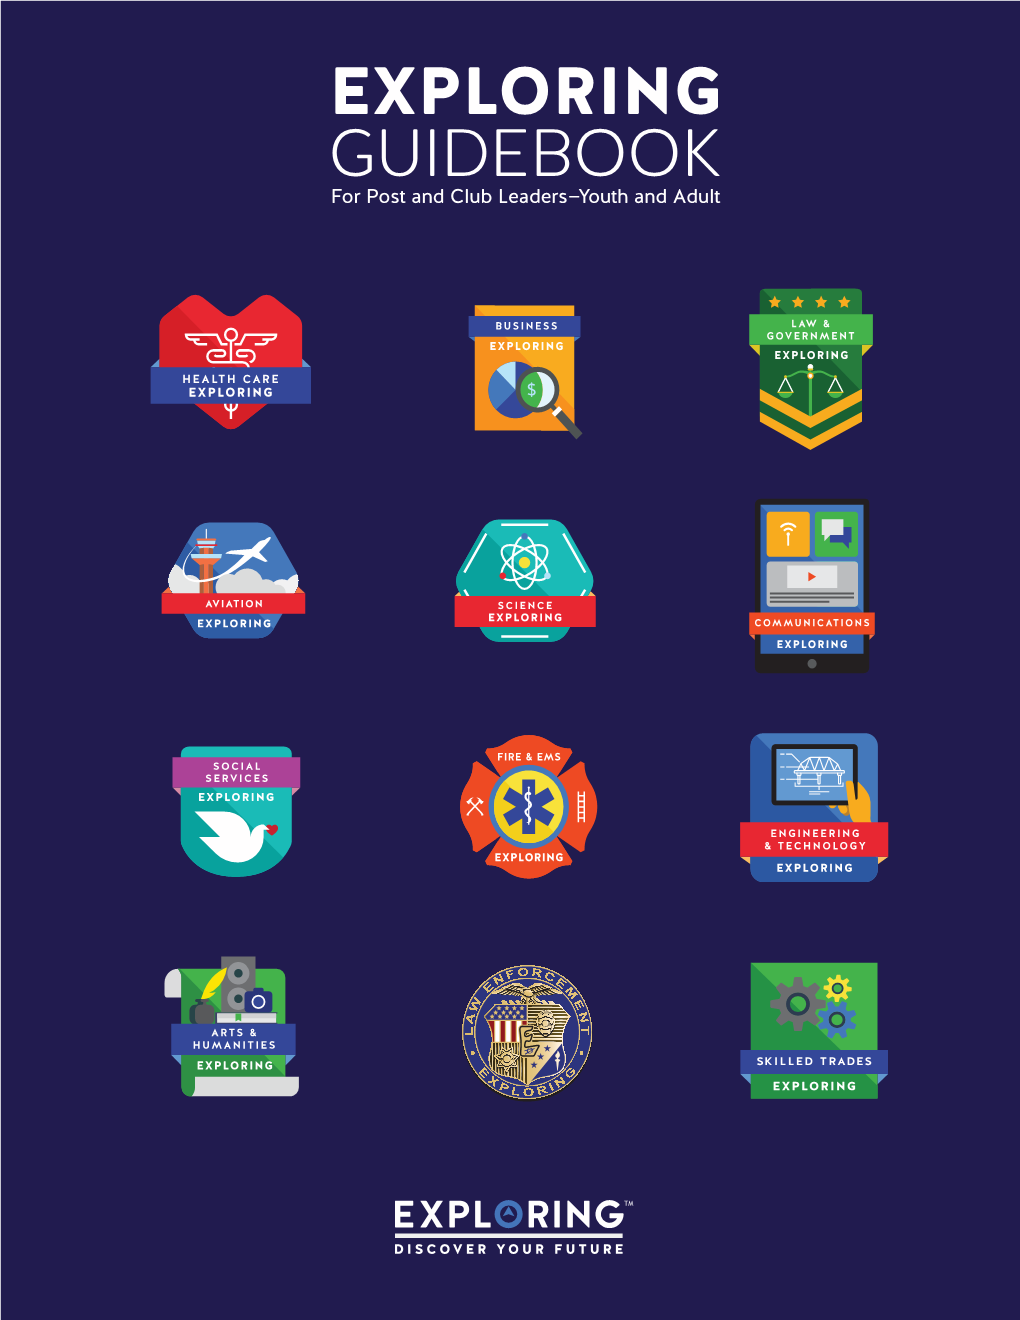 Exploring Guidebook for Leaders